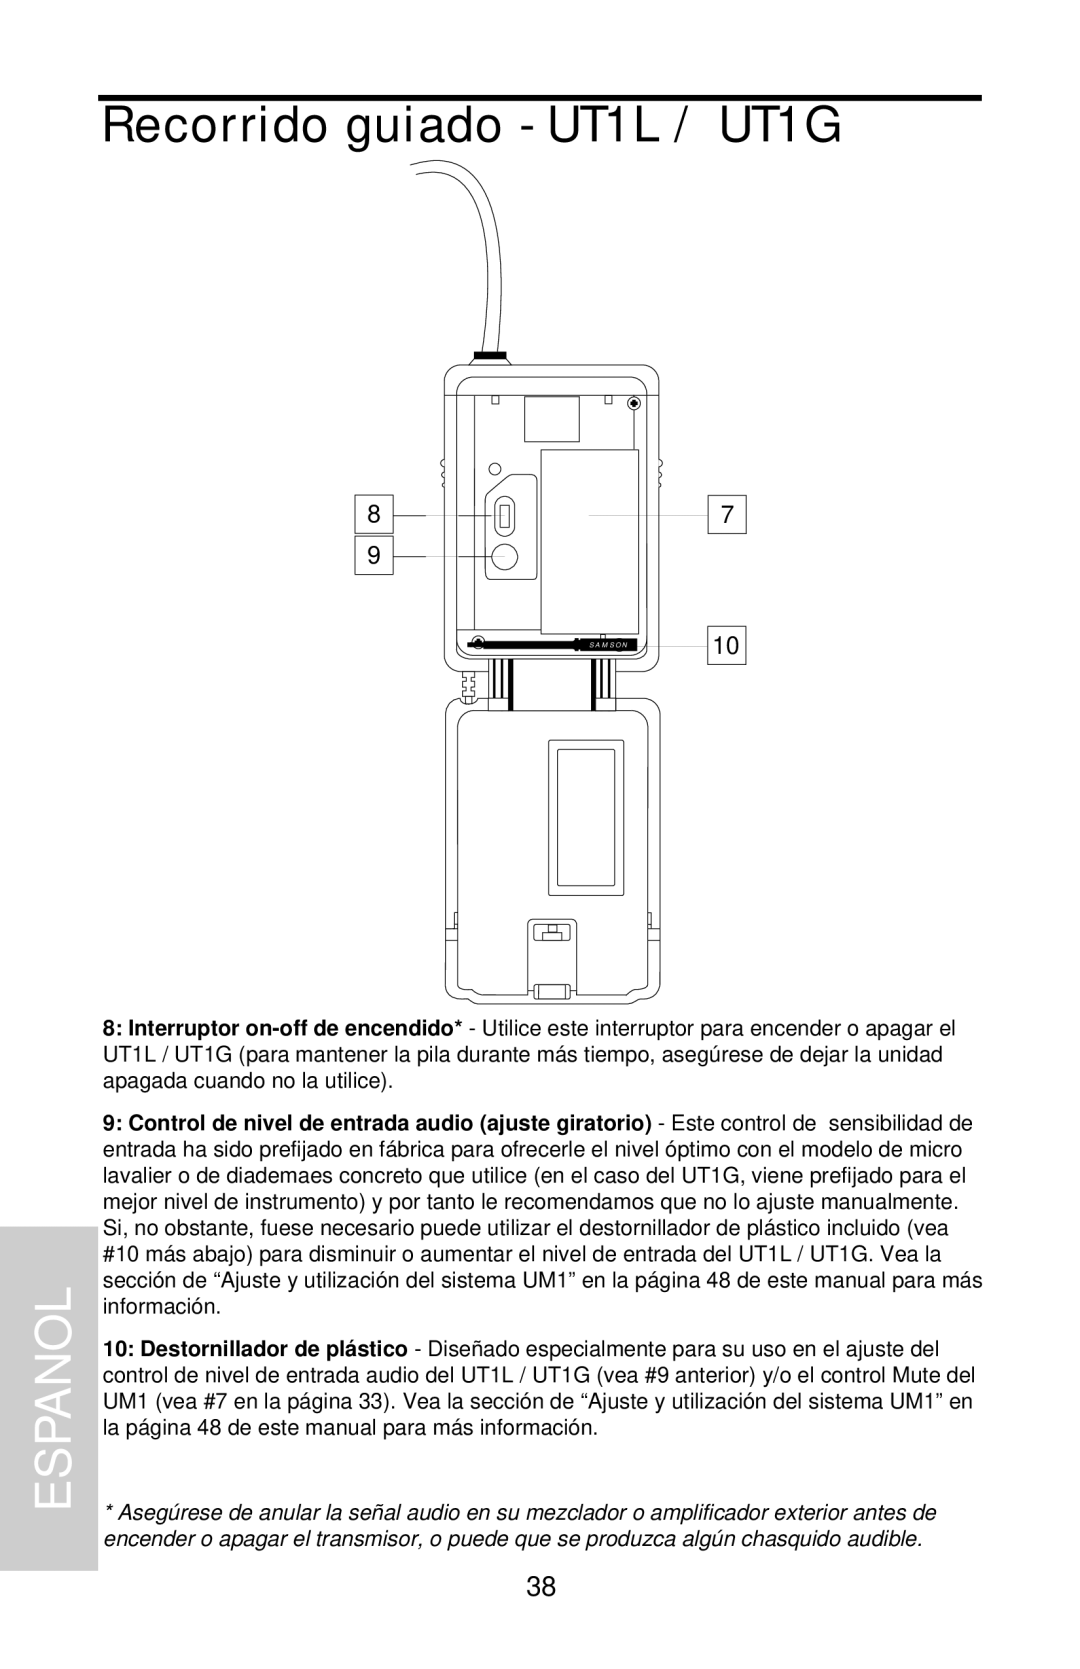 Samson UHF Series One owner manual Recorrido guiado - UT1L / UT1G, Espanol 